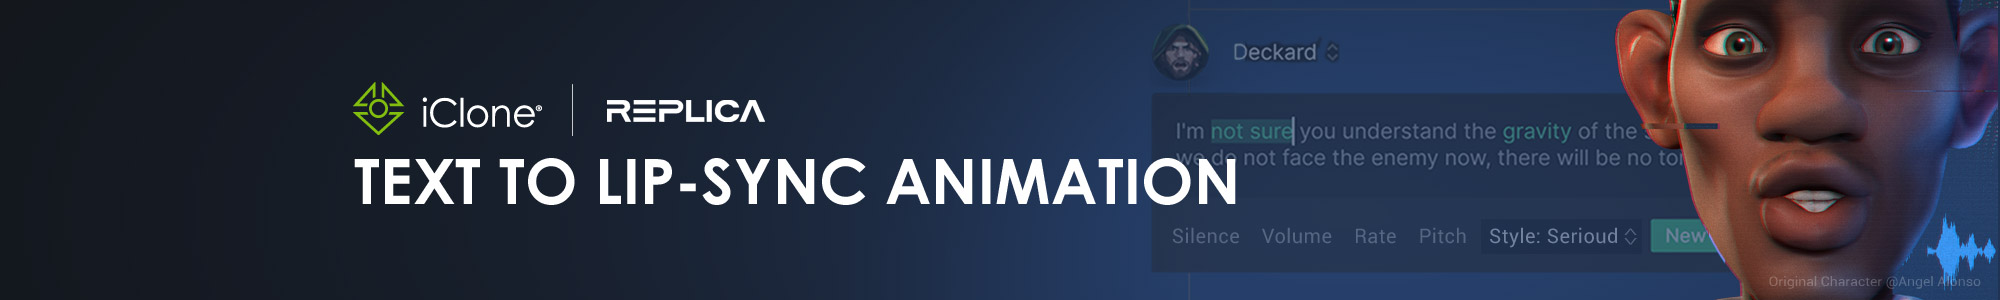 lipsync animation - talking animation from ai voice actor - replica studios